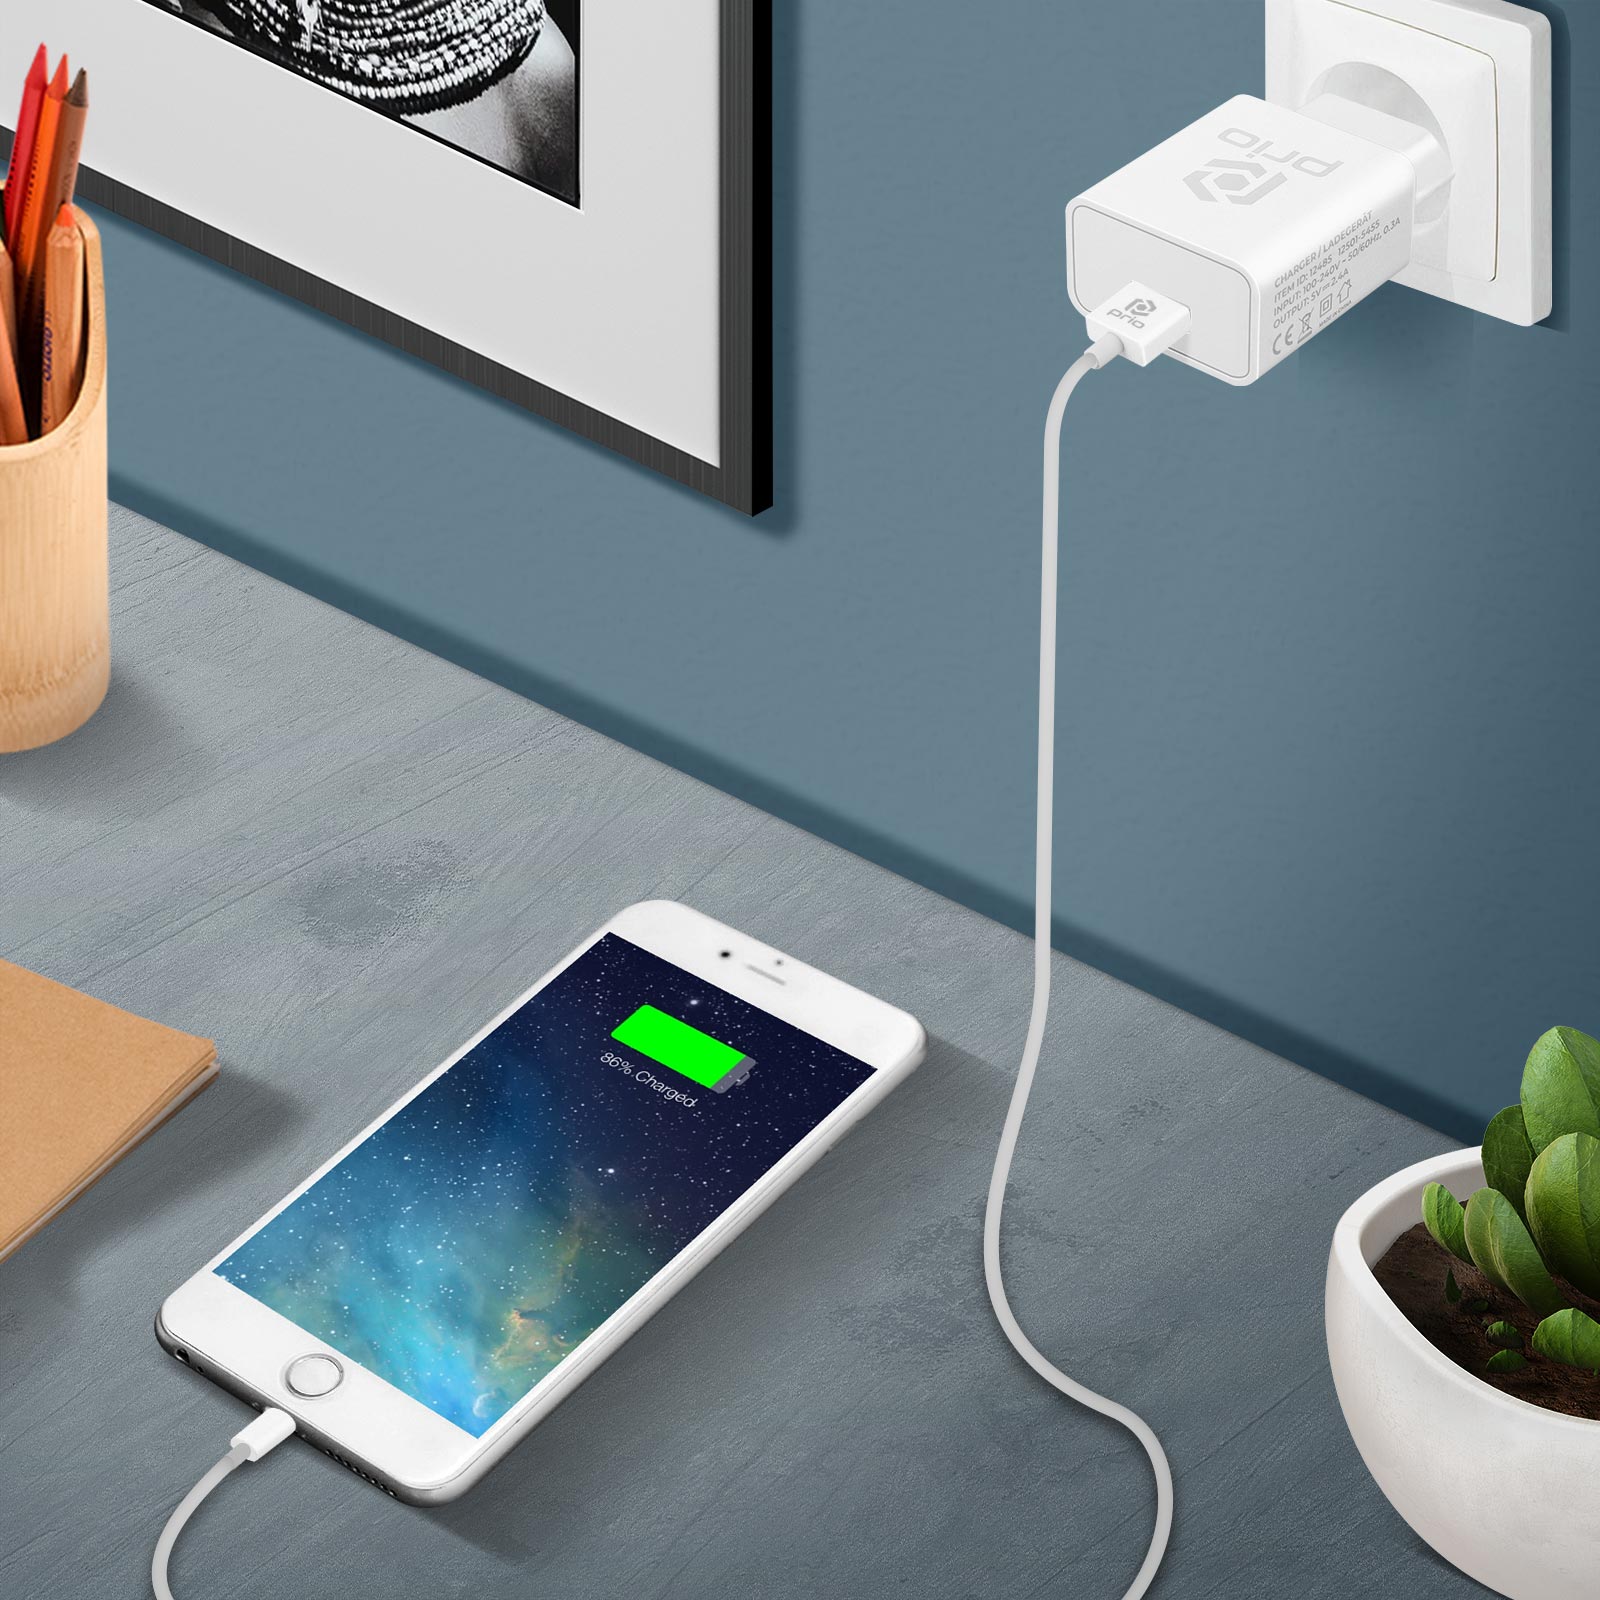 Chargeur iPhone + câble lightning, charge rapide 2.4A certifié MFI